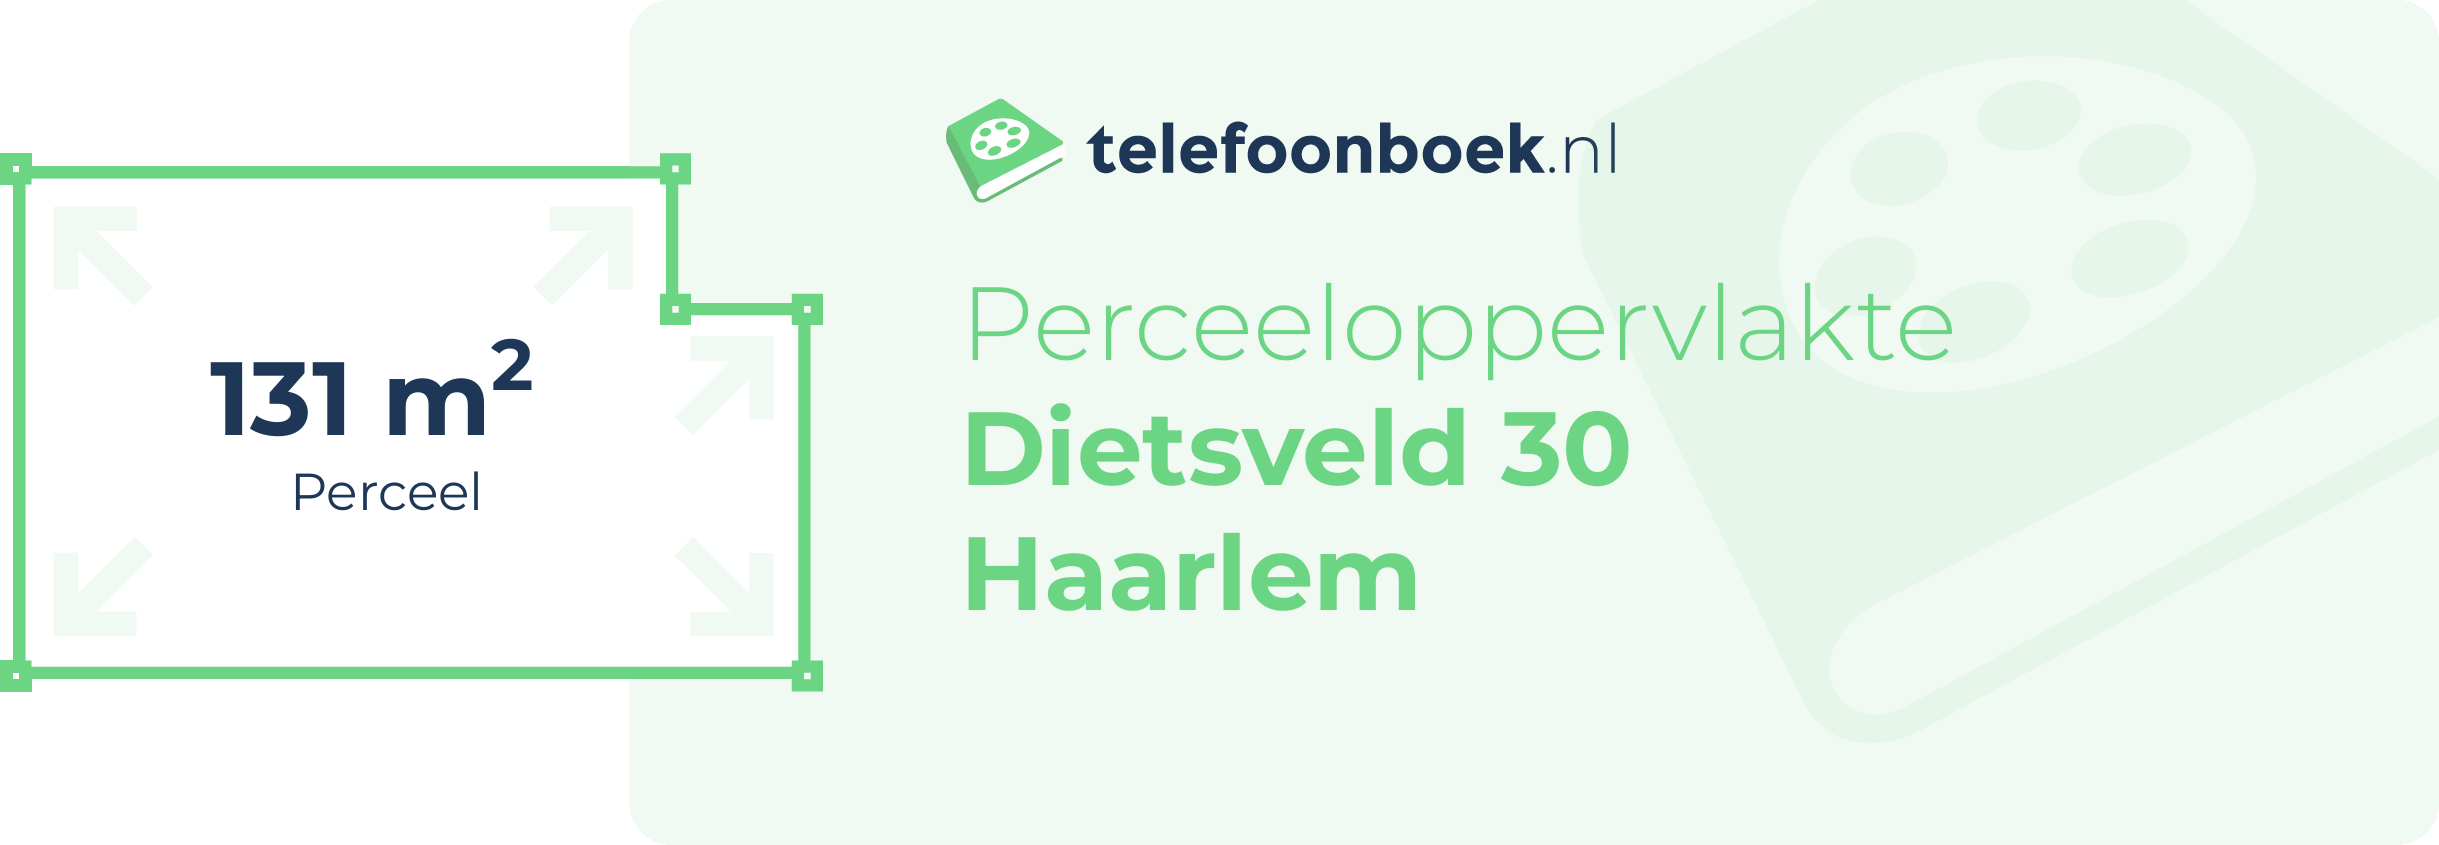 Perceeloppervlakte Dietsveld 30 Haarlem